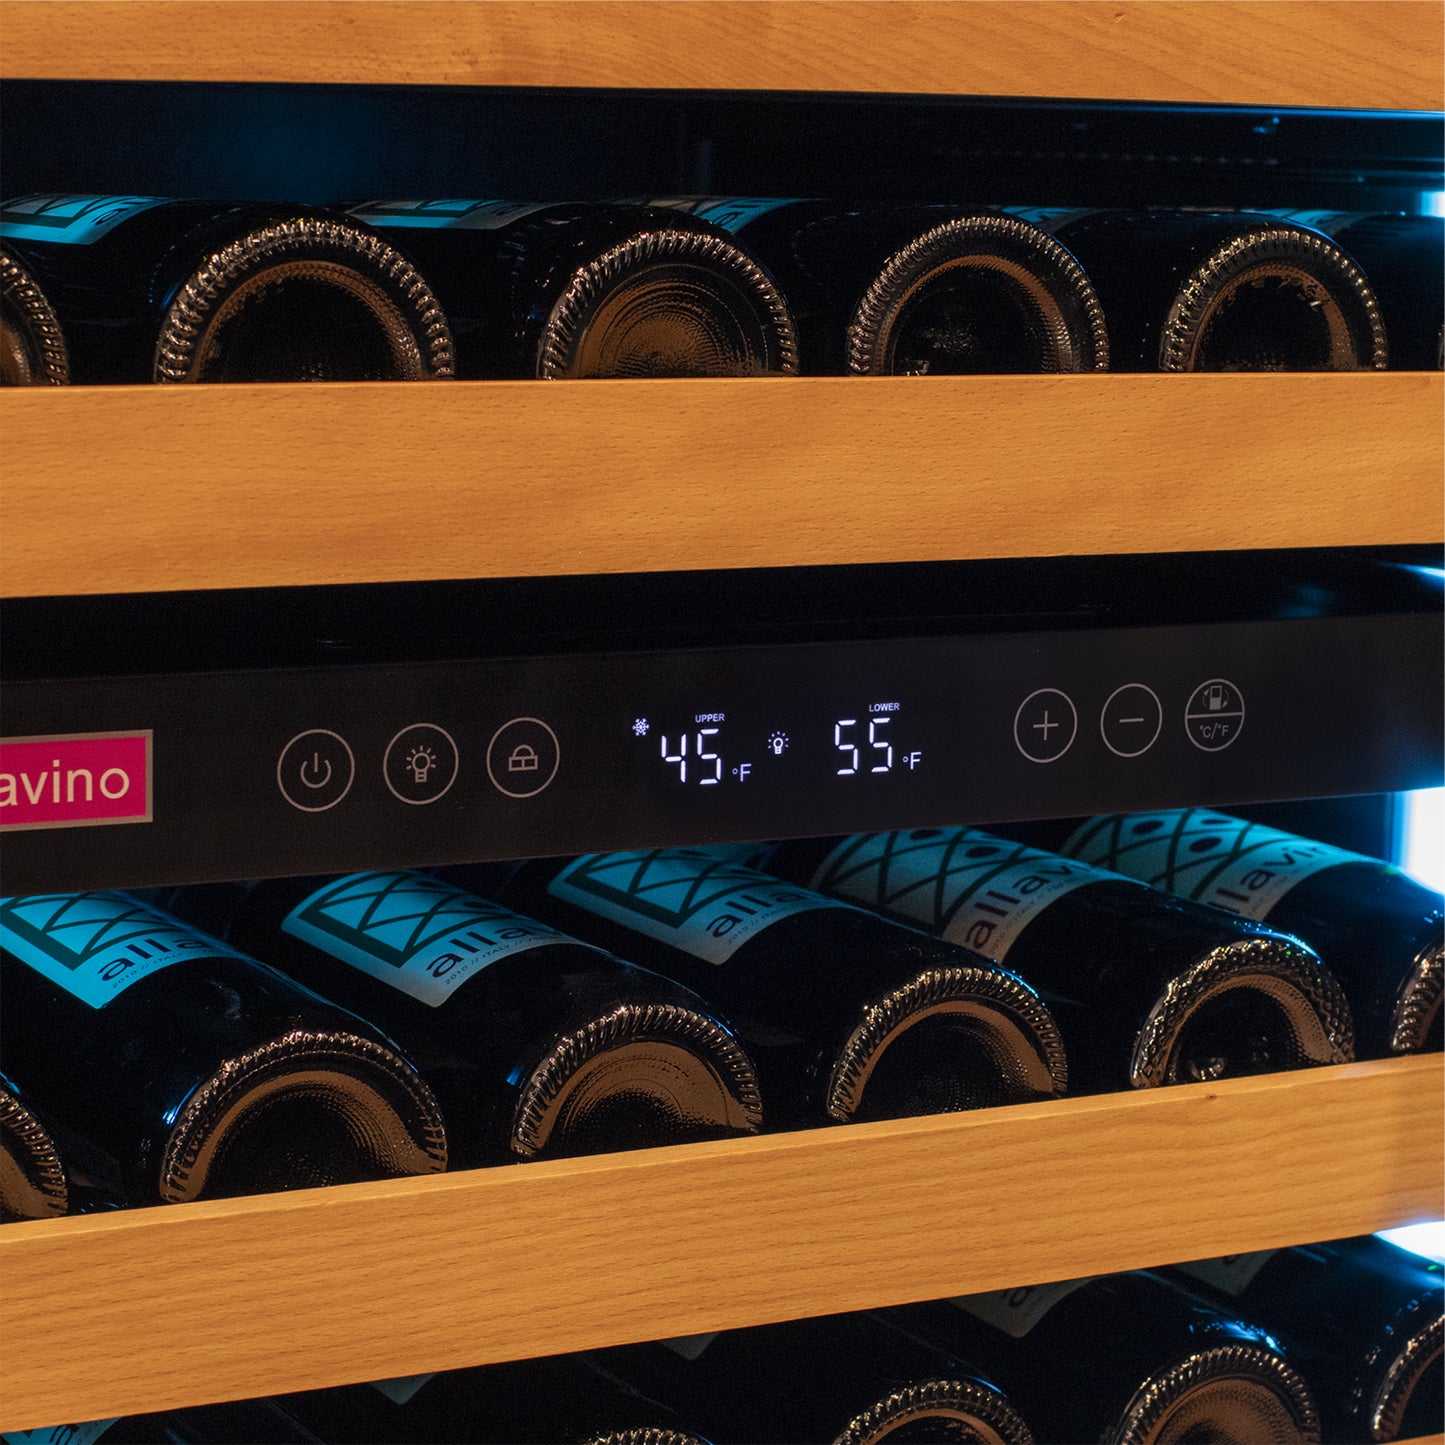 Allavino Reserva Series 119 Bottle 55" Tall Dual Zone Left Hinge Black Glass Wine Refrigerator